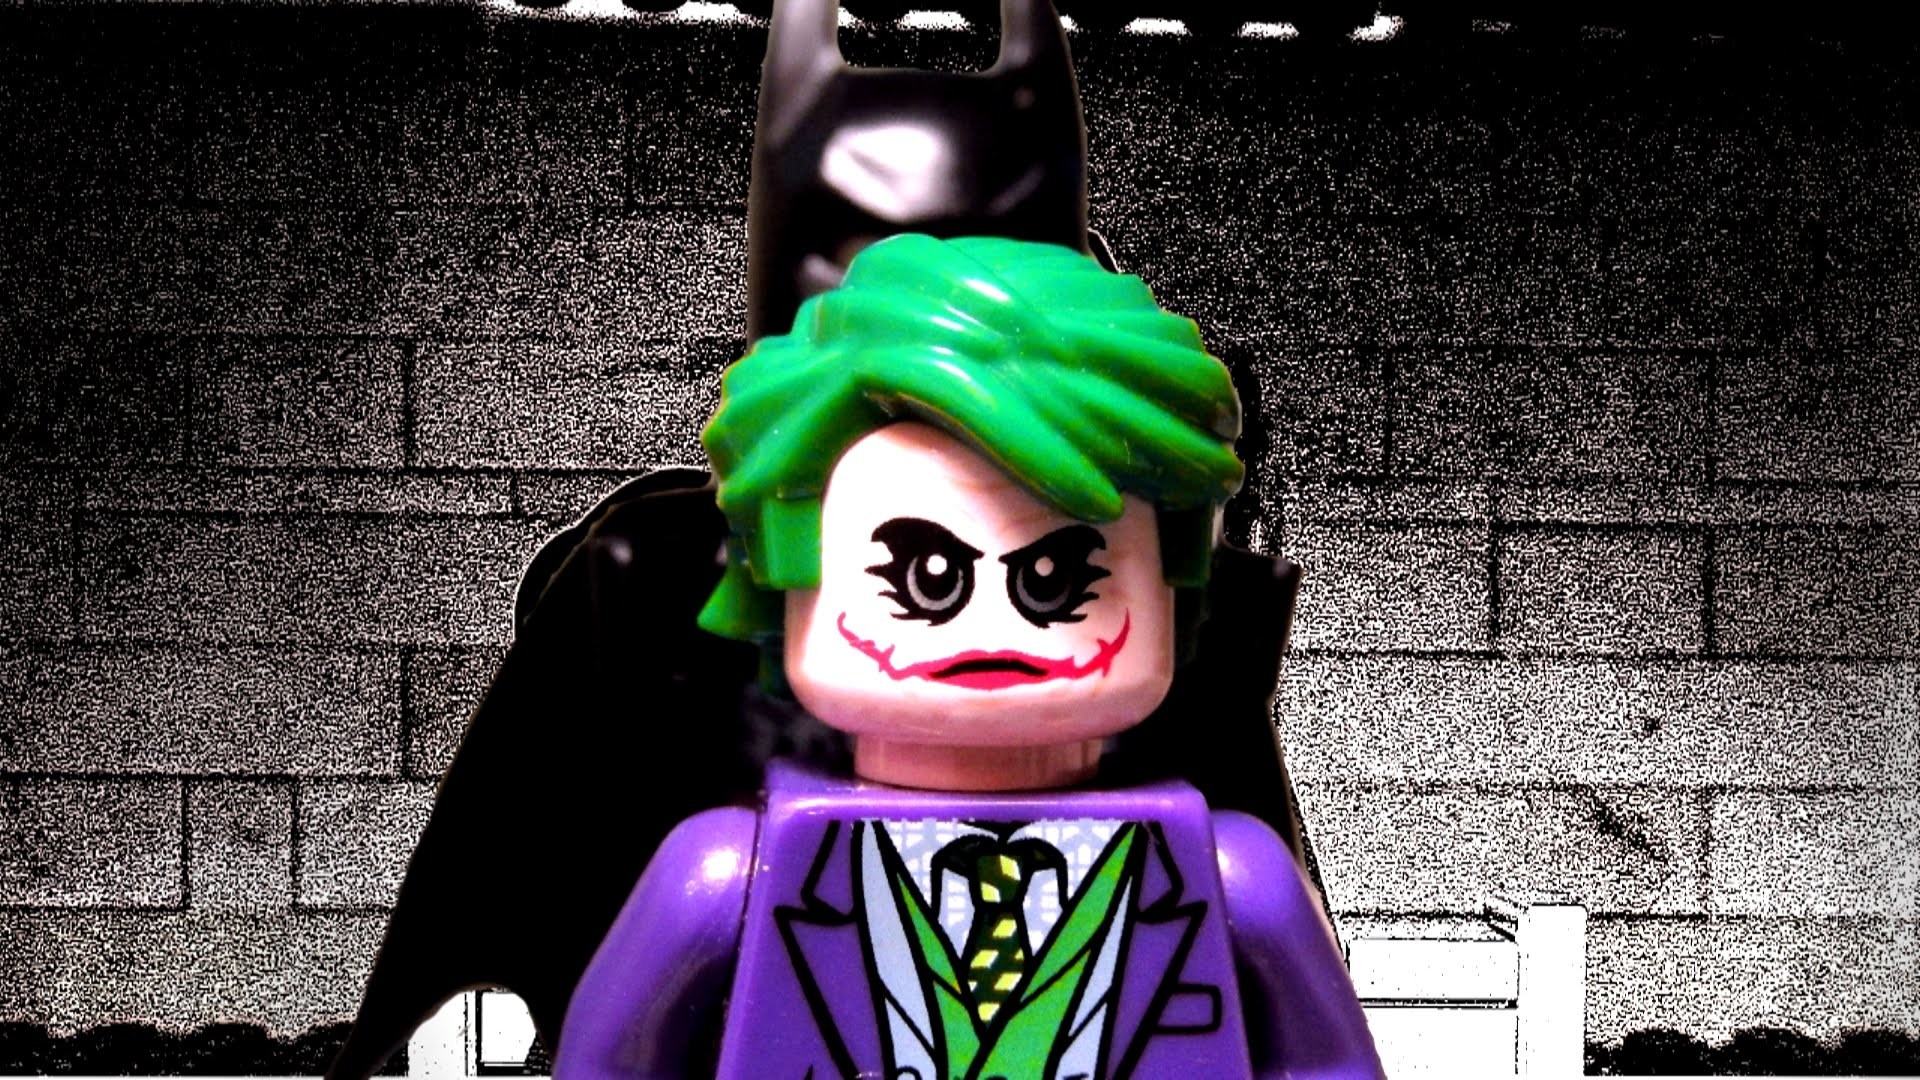 1920x1080 The Dark Knight Interrogation Scene in LEGO - Batman vs Joker - YouTube